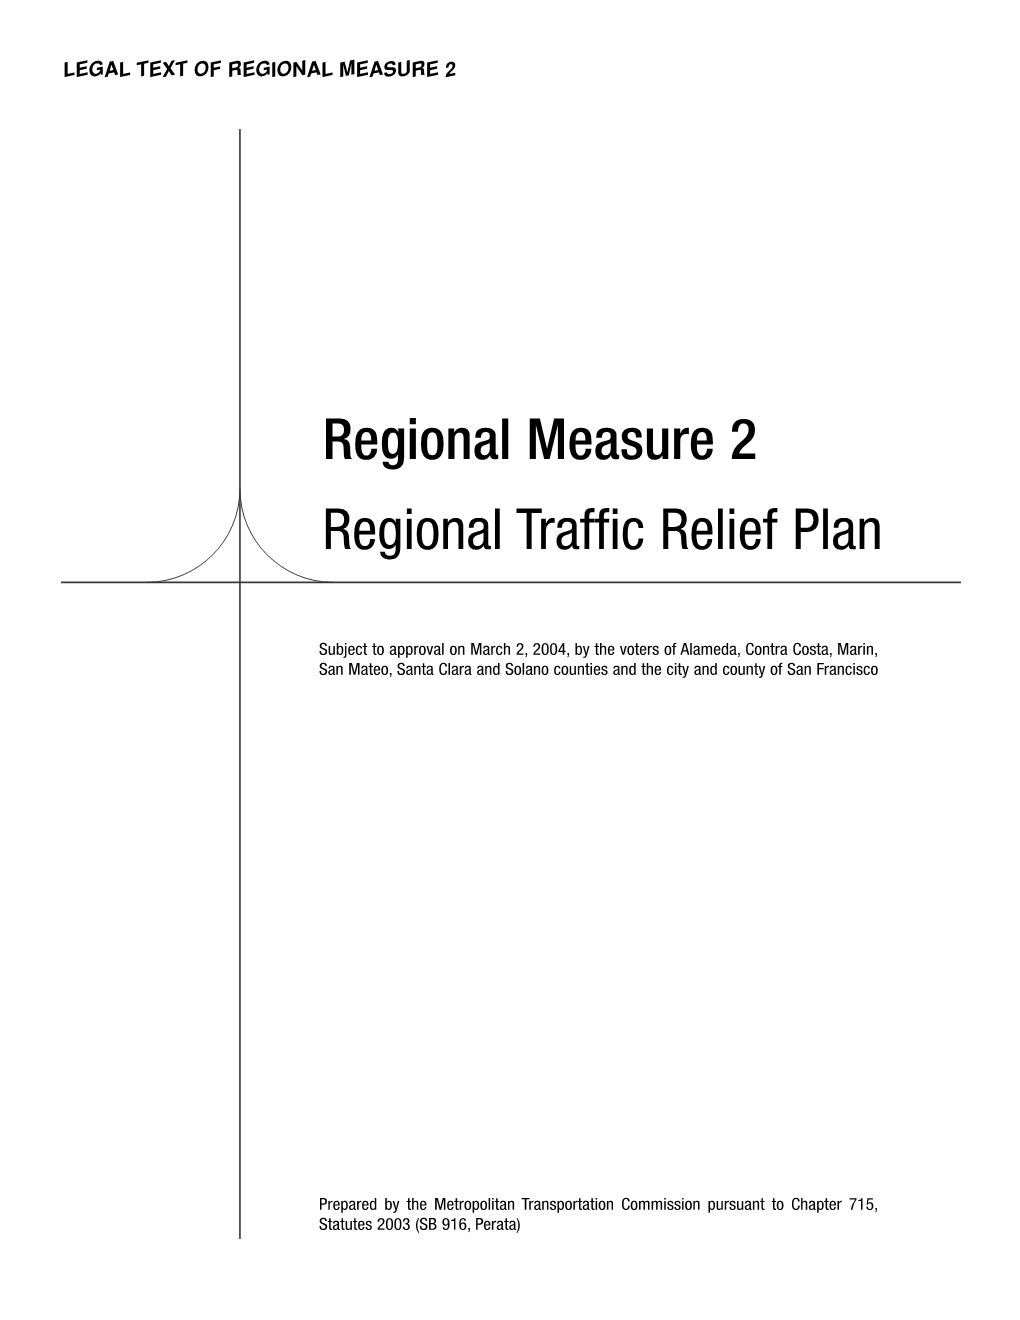 Regional Measure 2 Regional Traffic Relief Plan